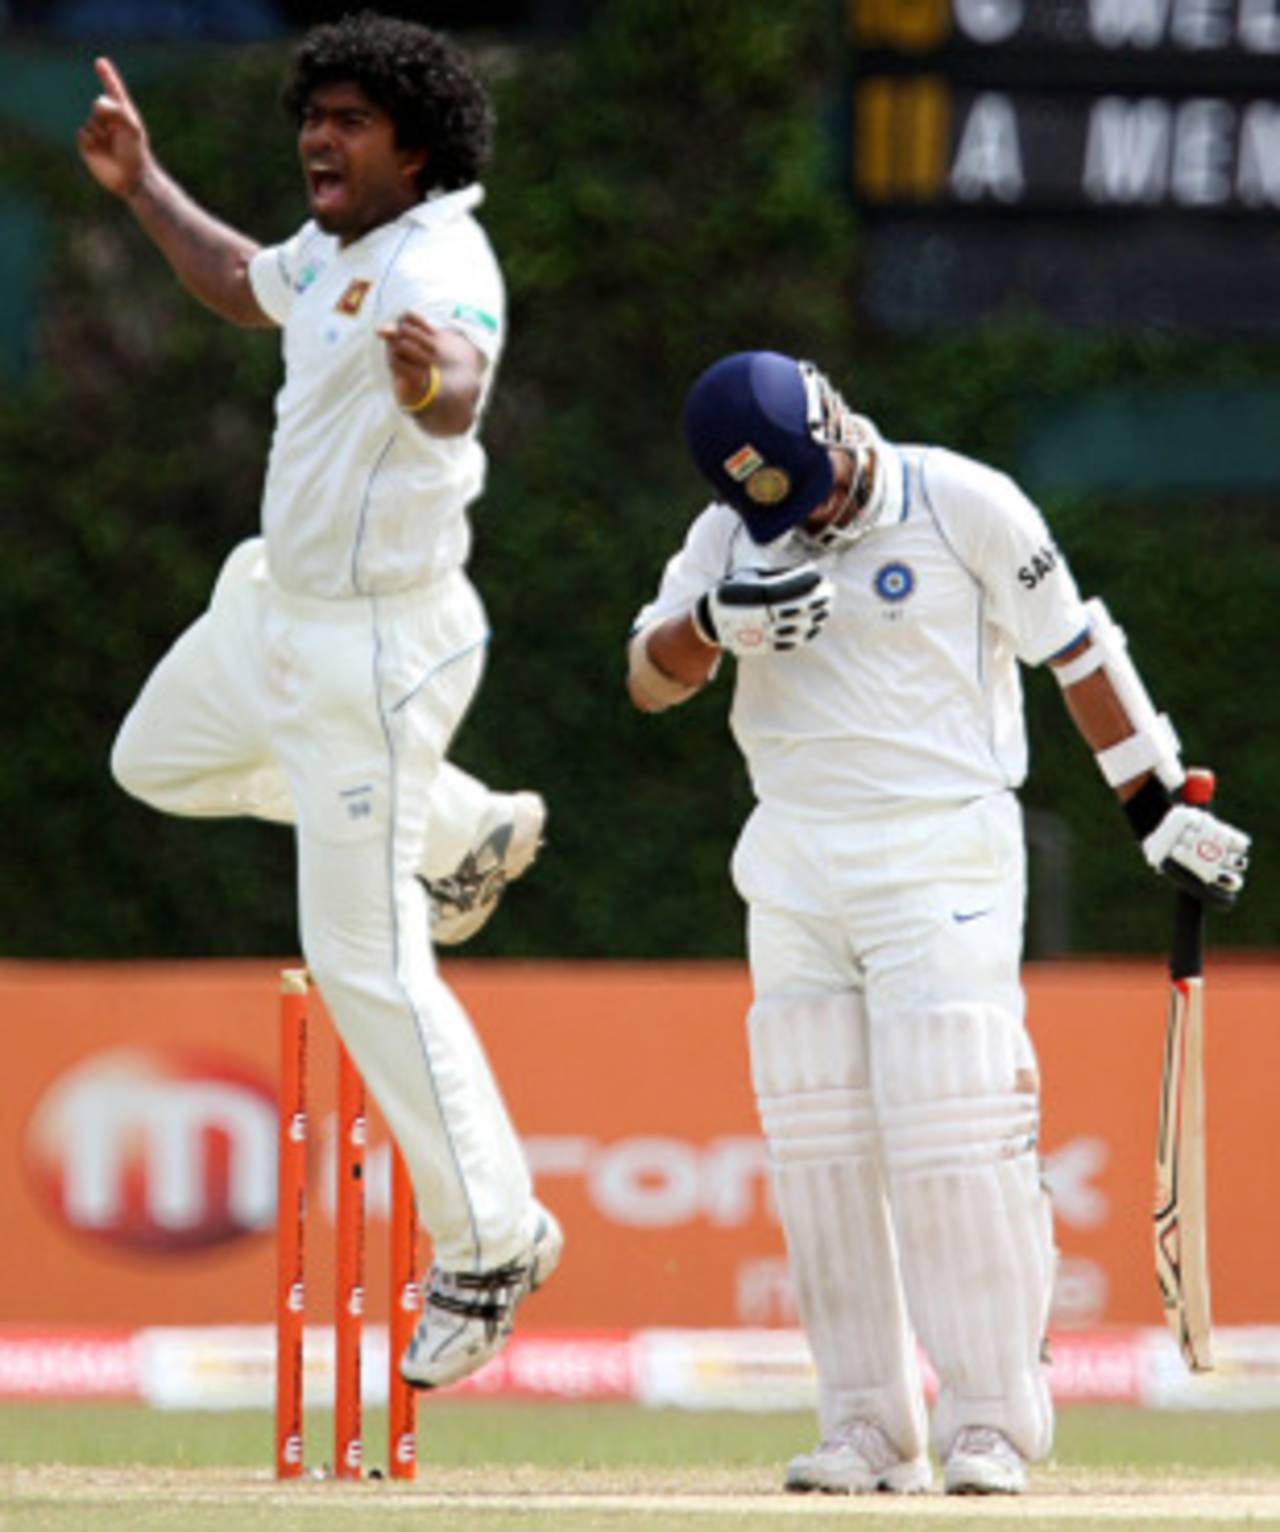 Lasith Malinga is thrilled after dismissing Sachin Tendulkar, Sri Lanka v India, 3rd Test, P Sara Oval, 3rd day, August 5, 2010